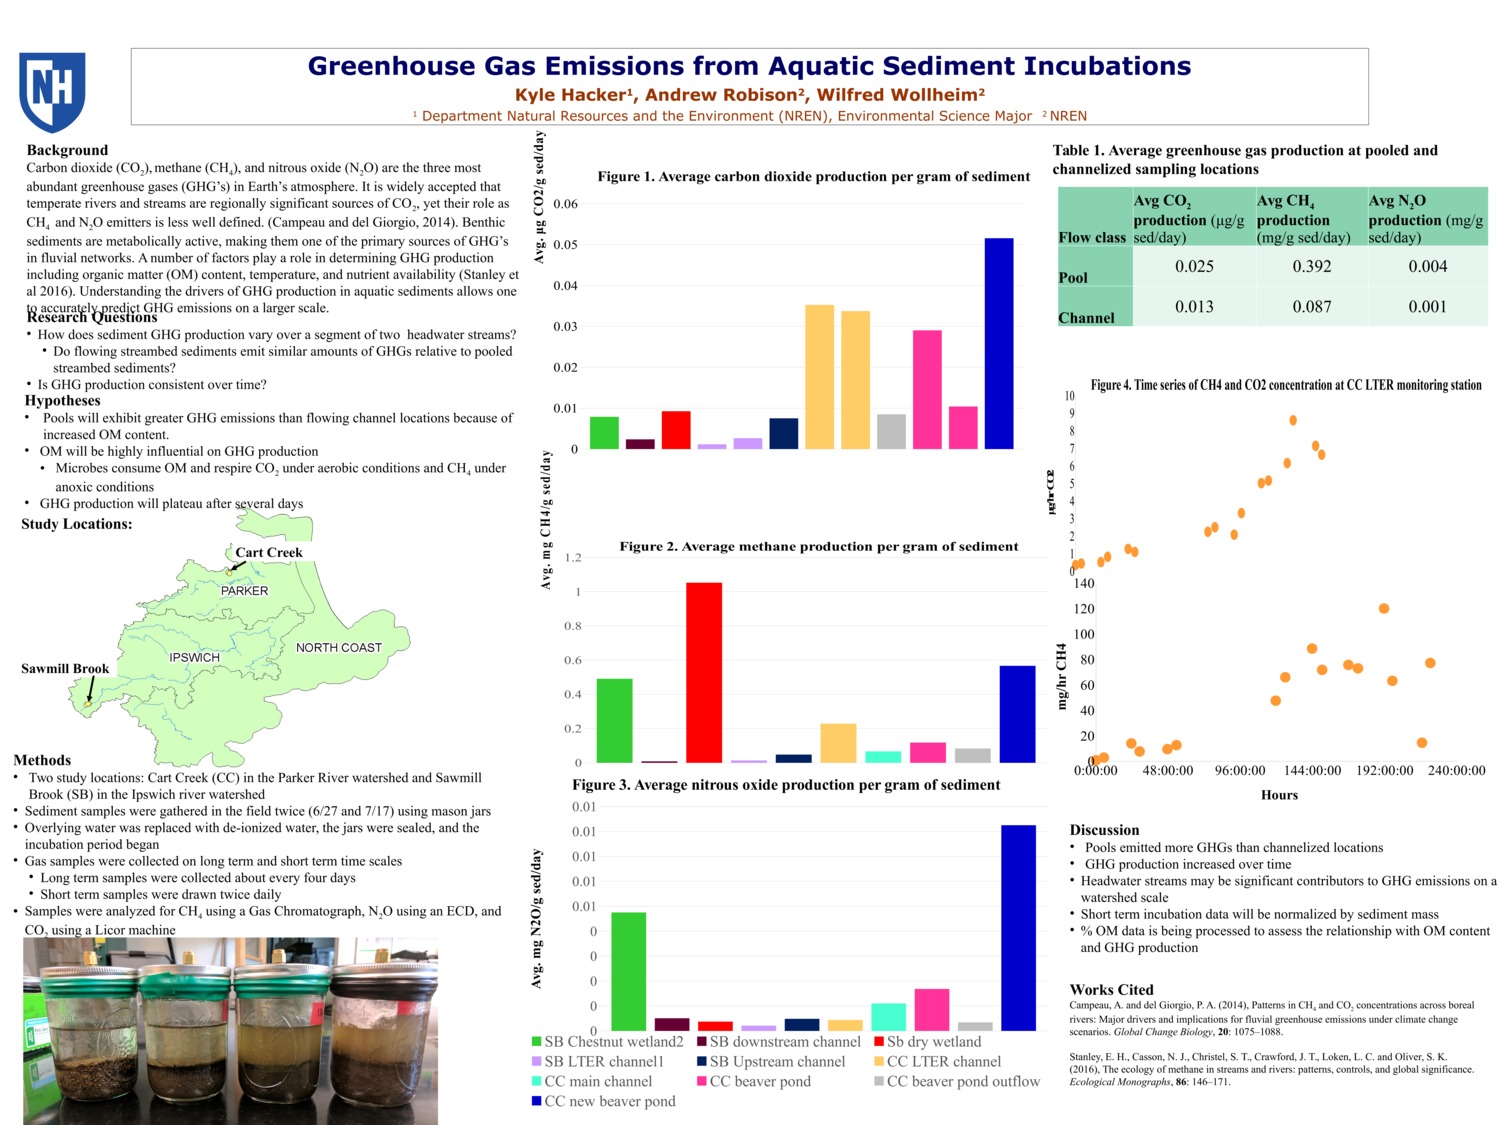 Greenhouse Gas Emissions From Aquatic Sediment Incubations by kh2015